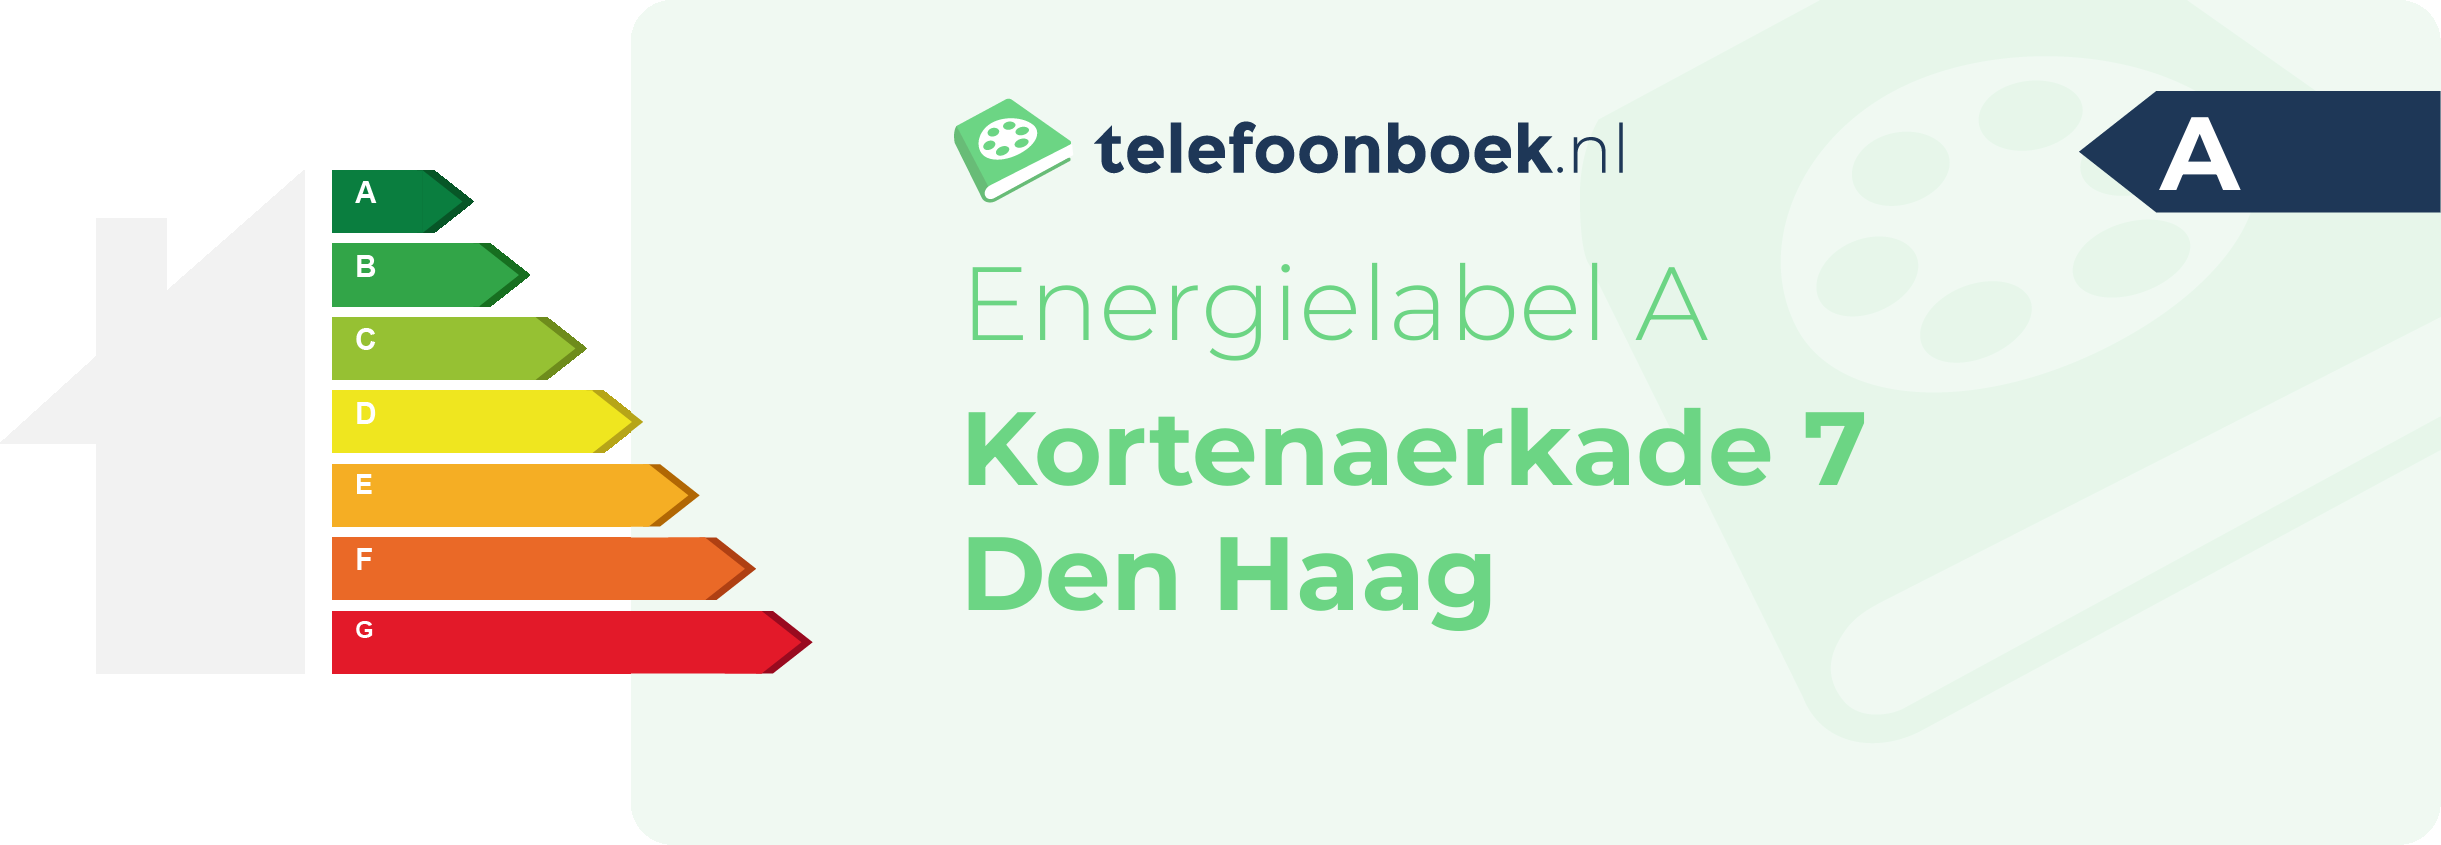 Energielabel Kortenaerkade 7 Den Haag